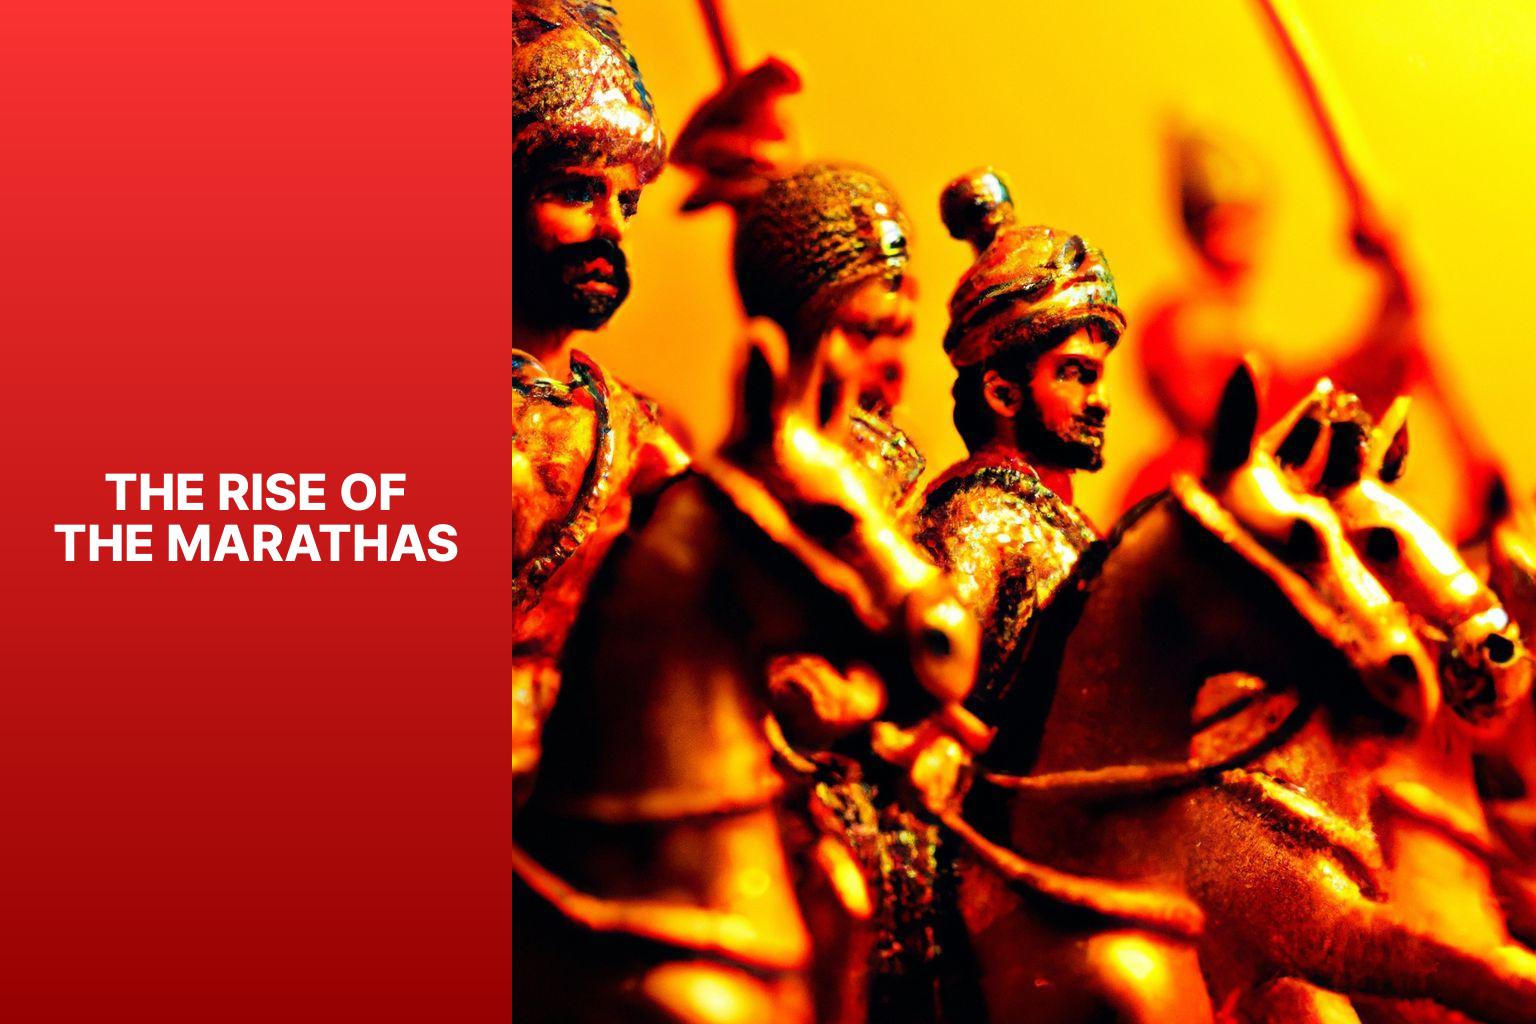 The Rise of the Marathas - The Maratha Empire